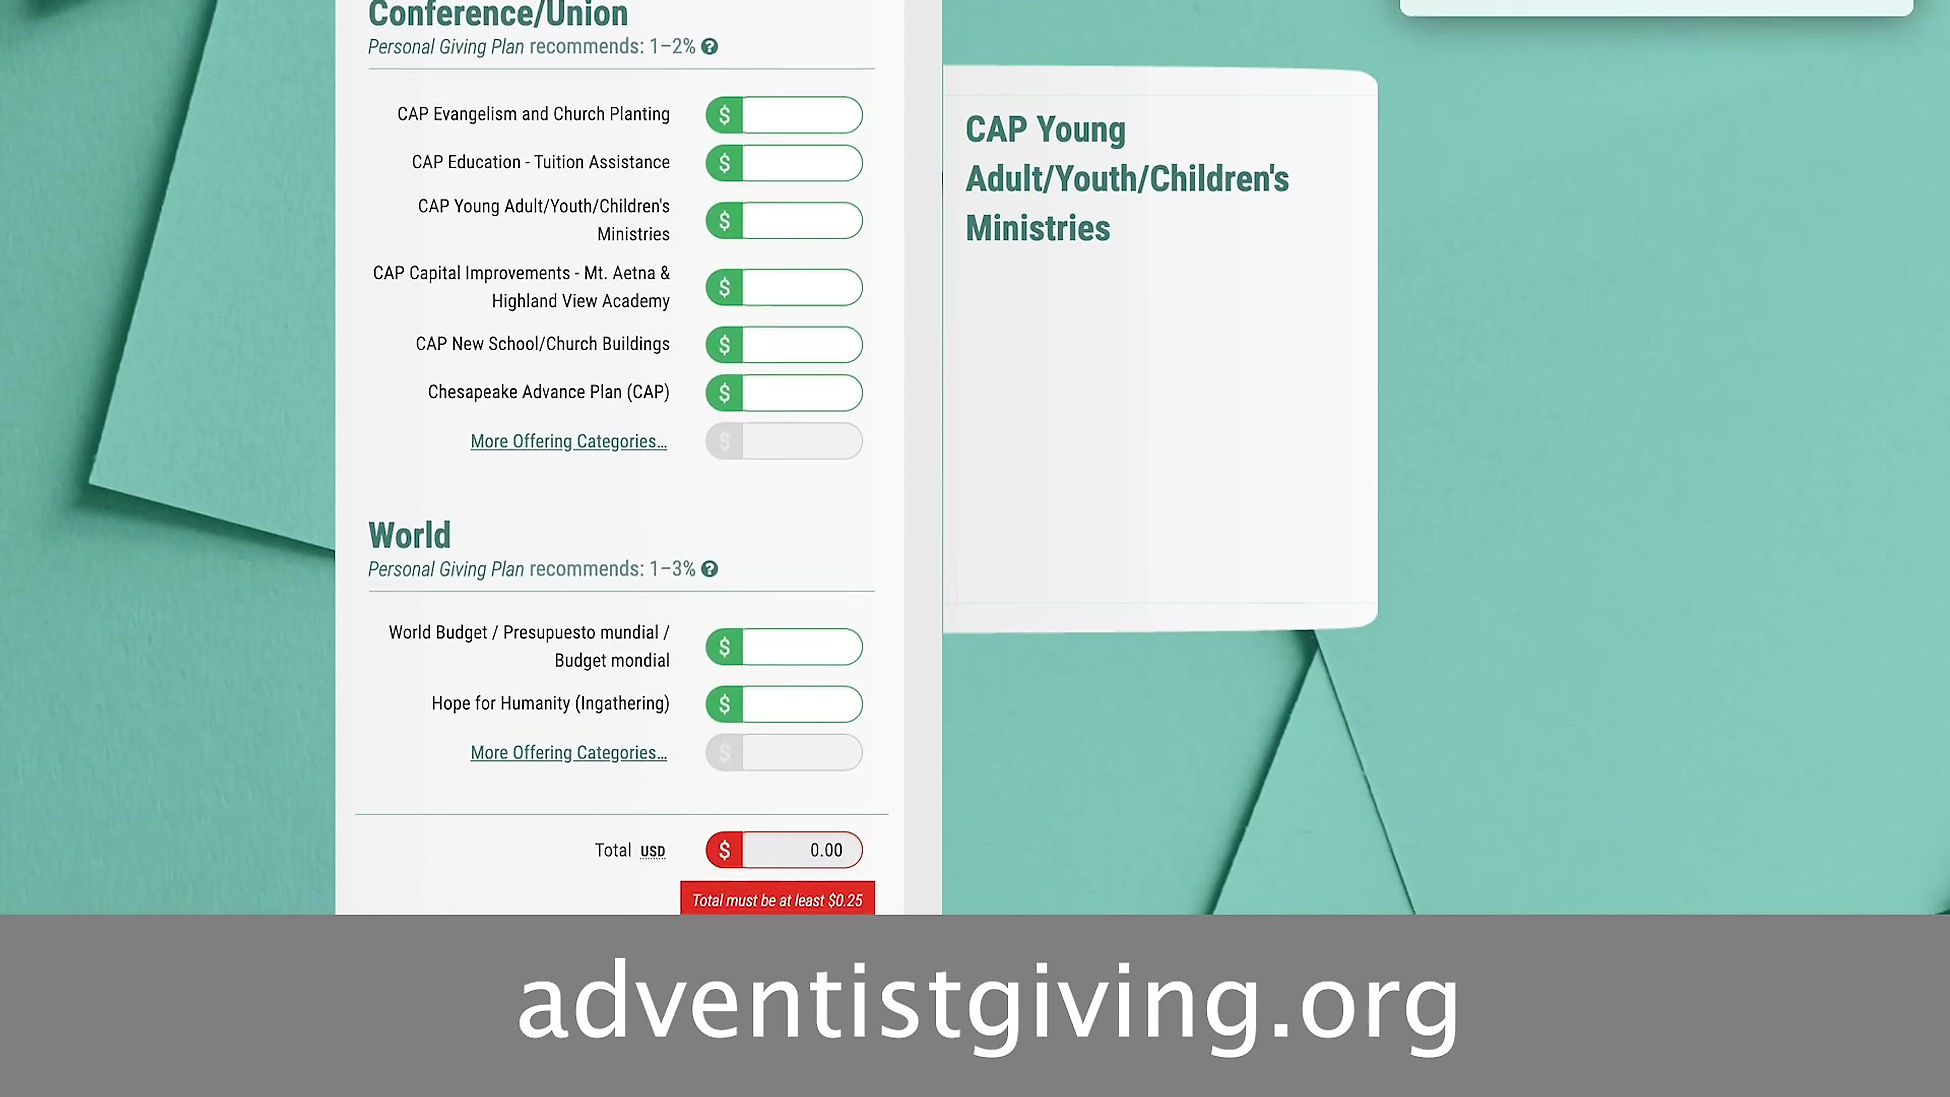 Adventist Giving